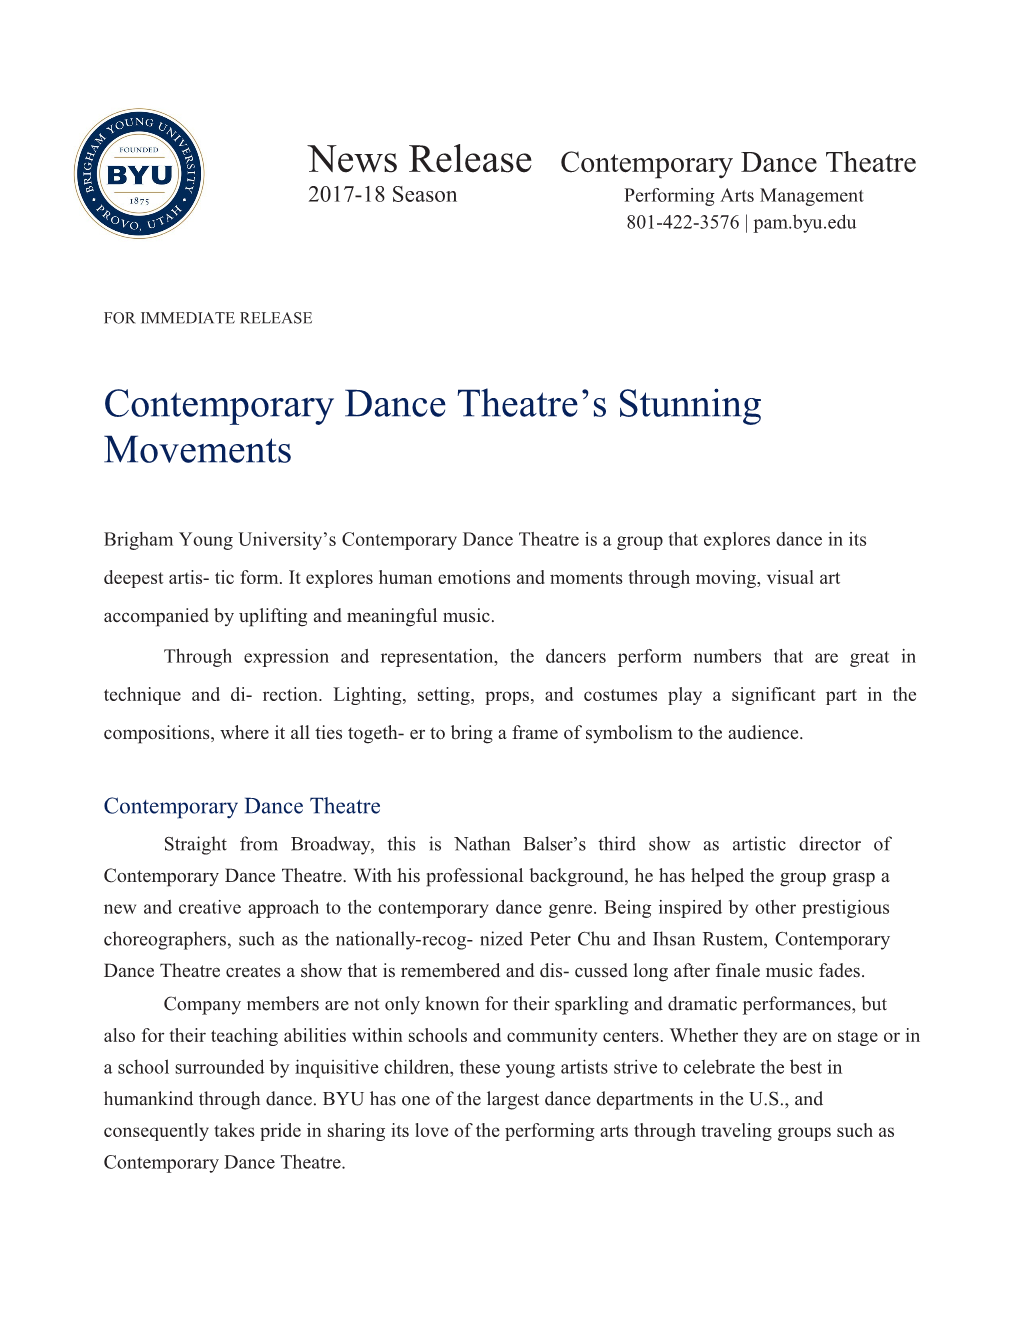 Contemporary Dance Theatre S Stunning Movements